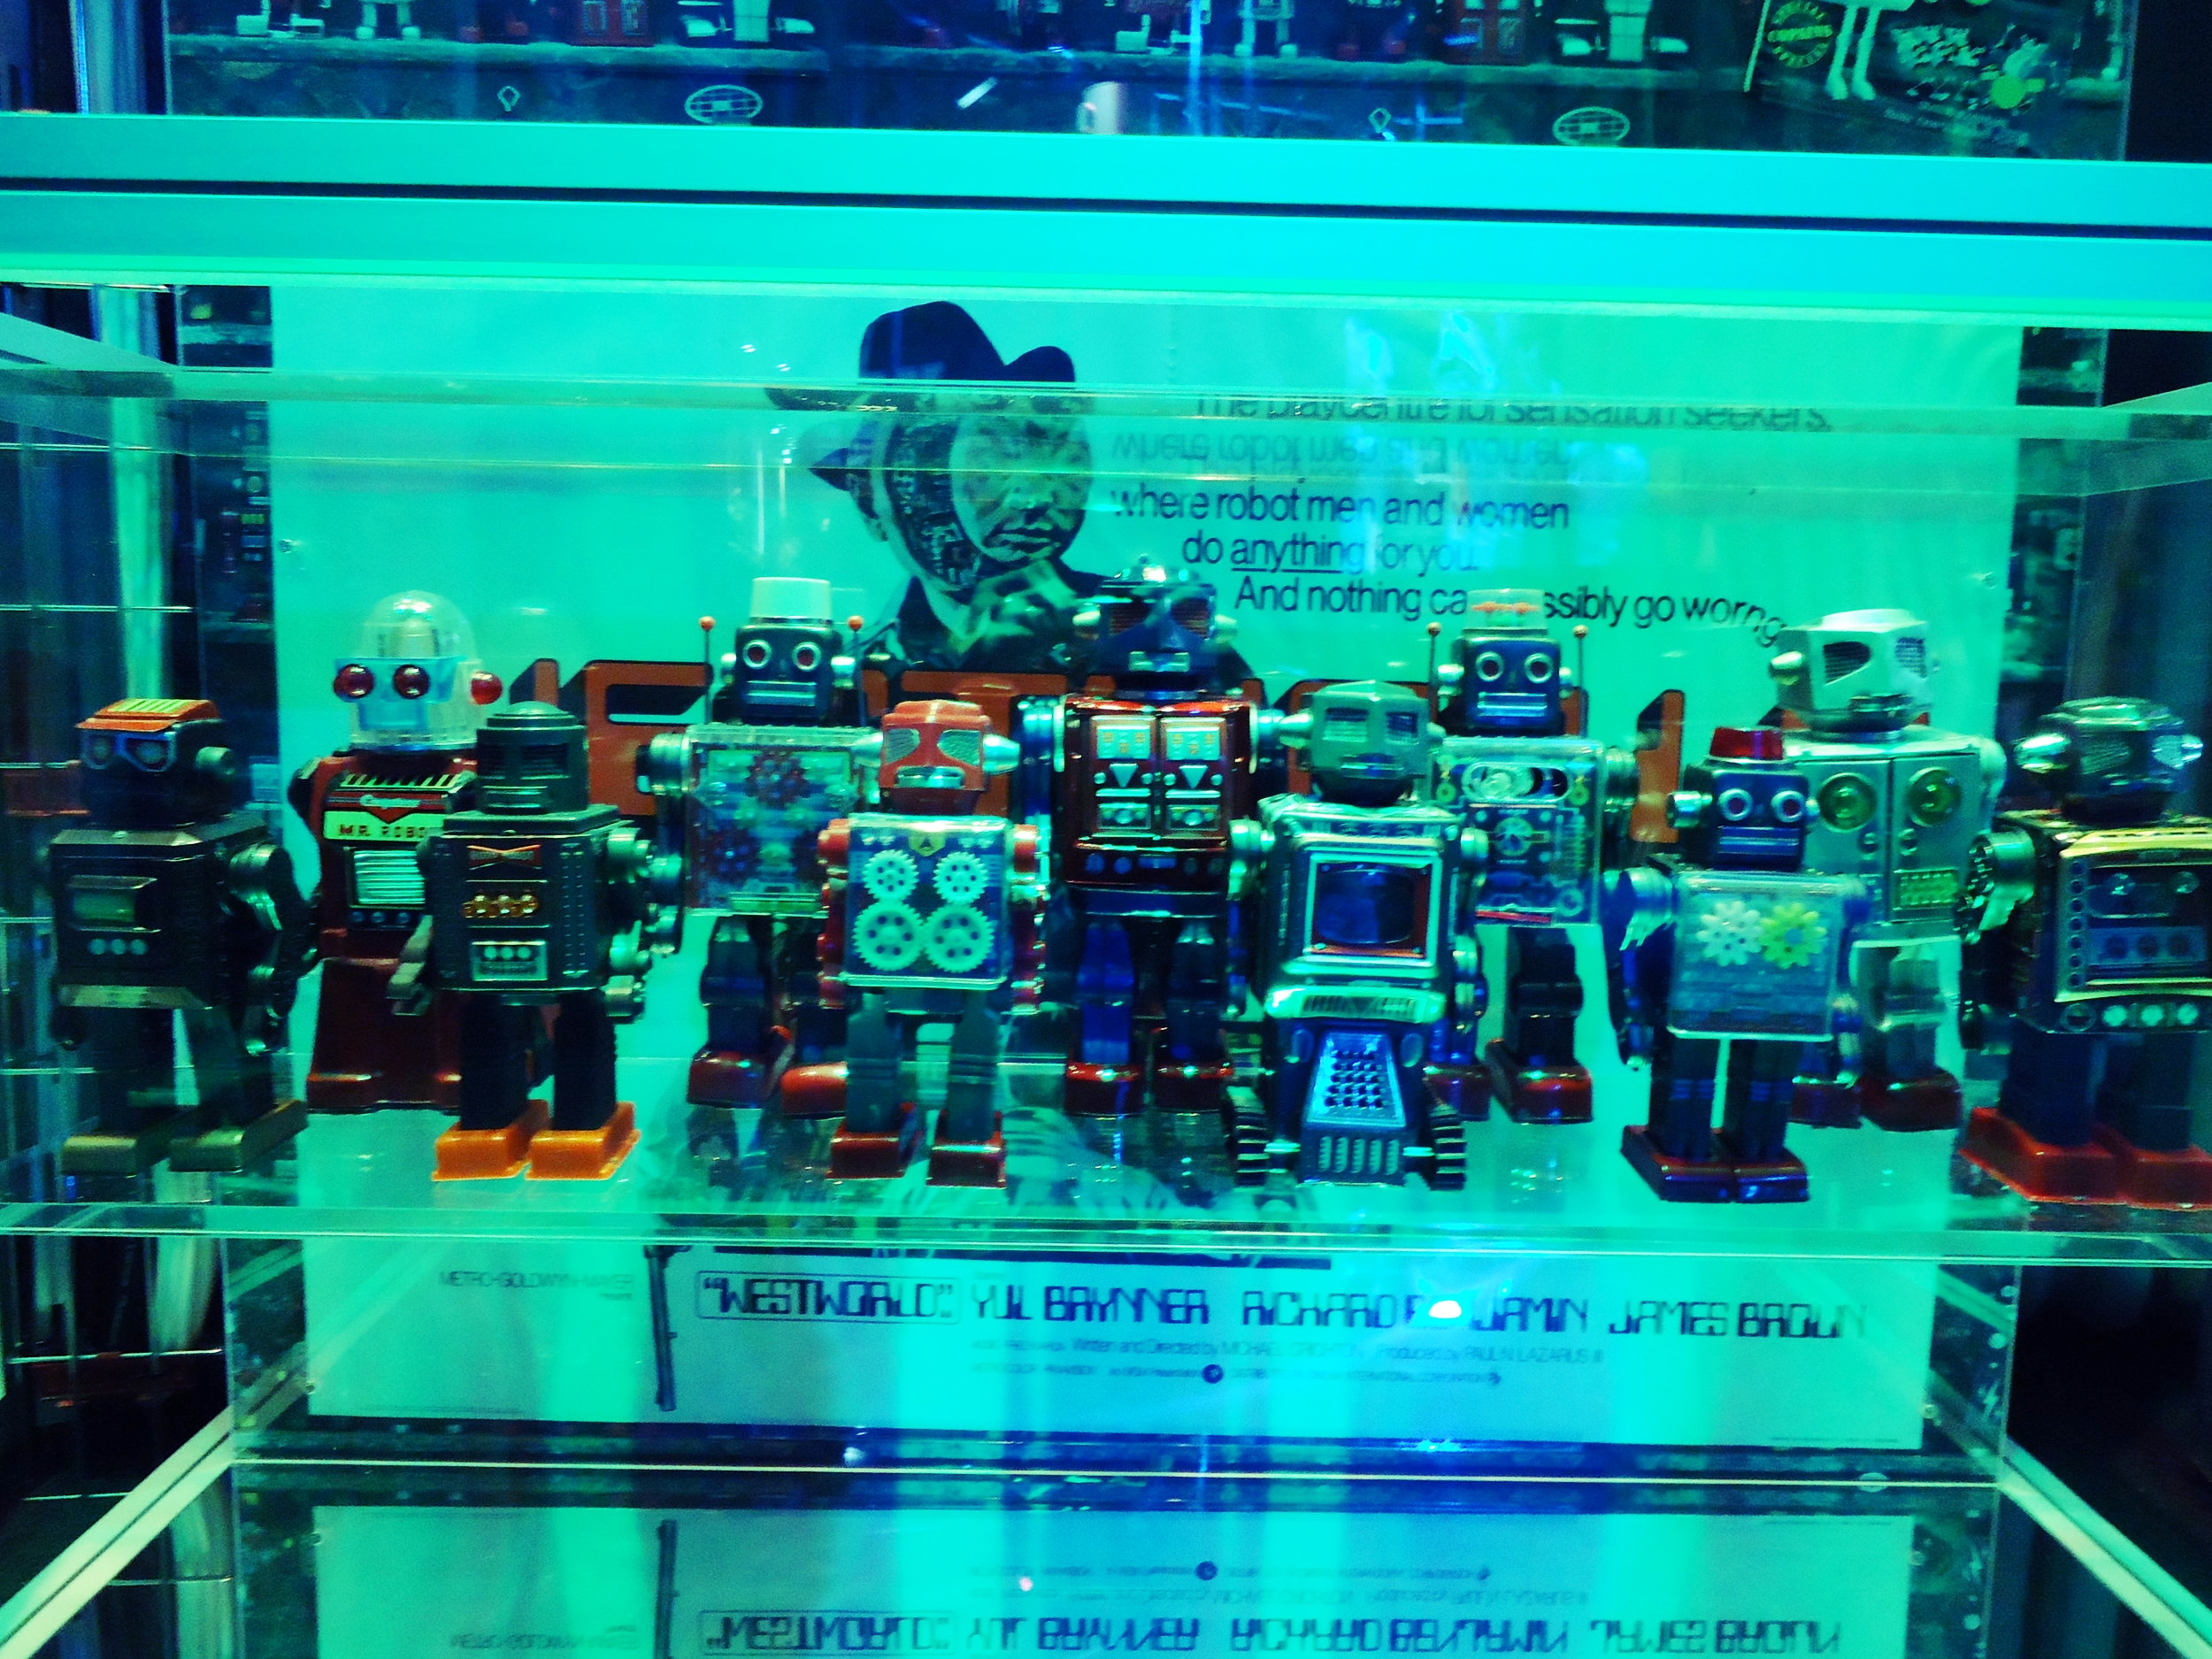 Robot Exhibition @ScienceMuseum